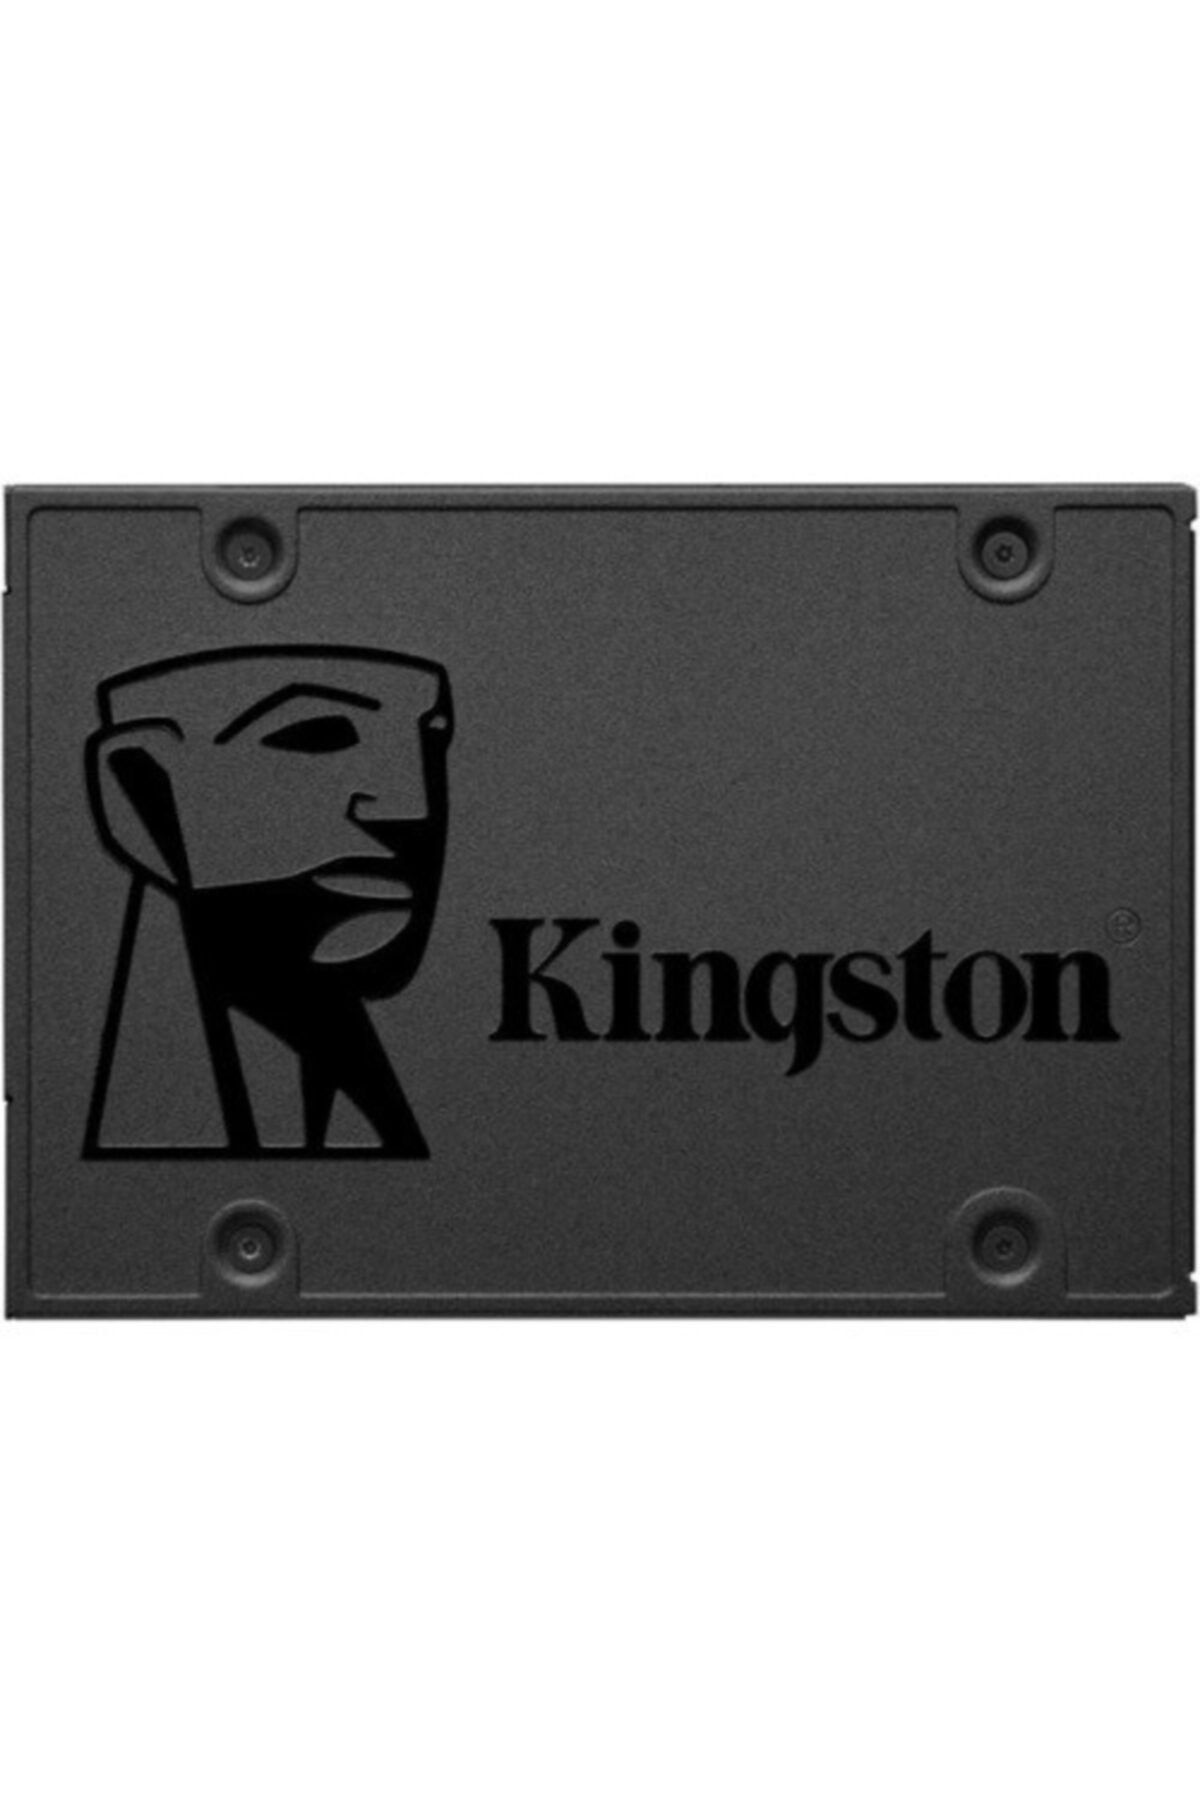 Kingston Kıngston Sa400s37/480g A400 2.5" 480gb (500/450MB/S) Sata (3D NAND) Ssd Disk (7MM)